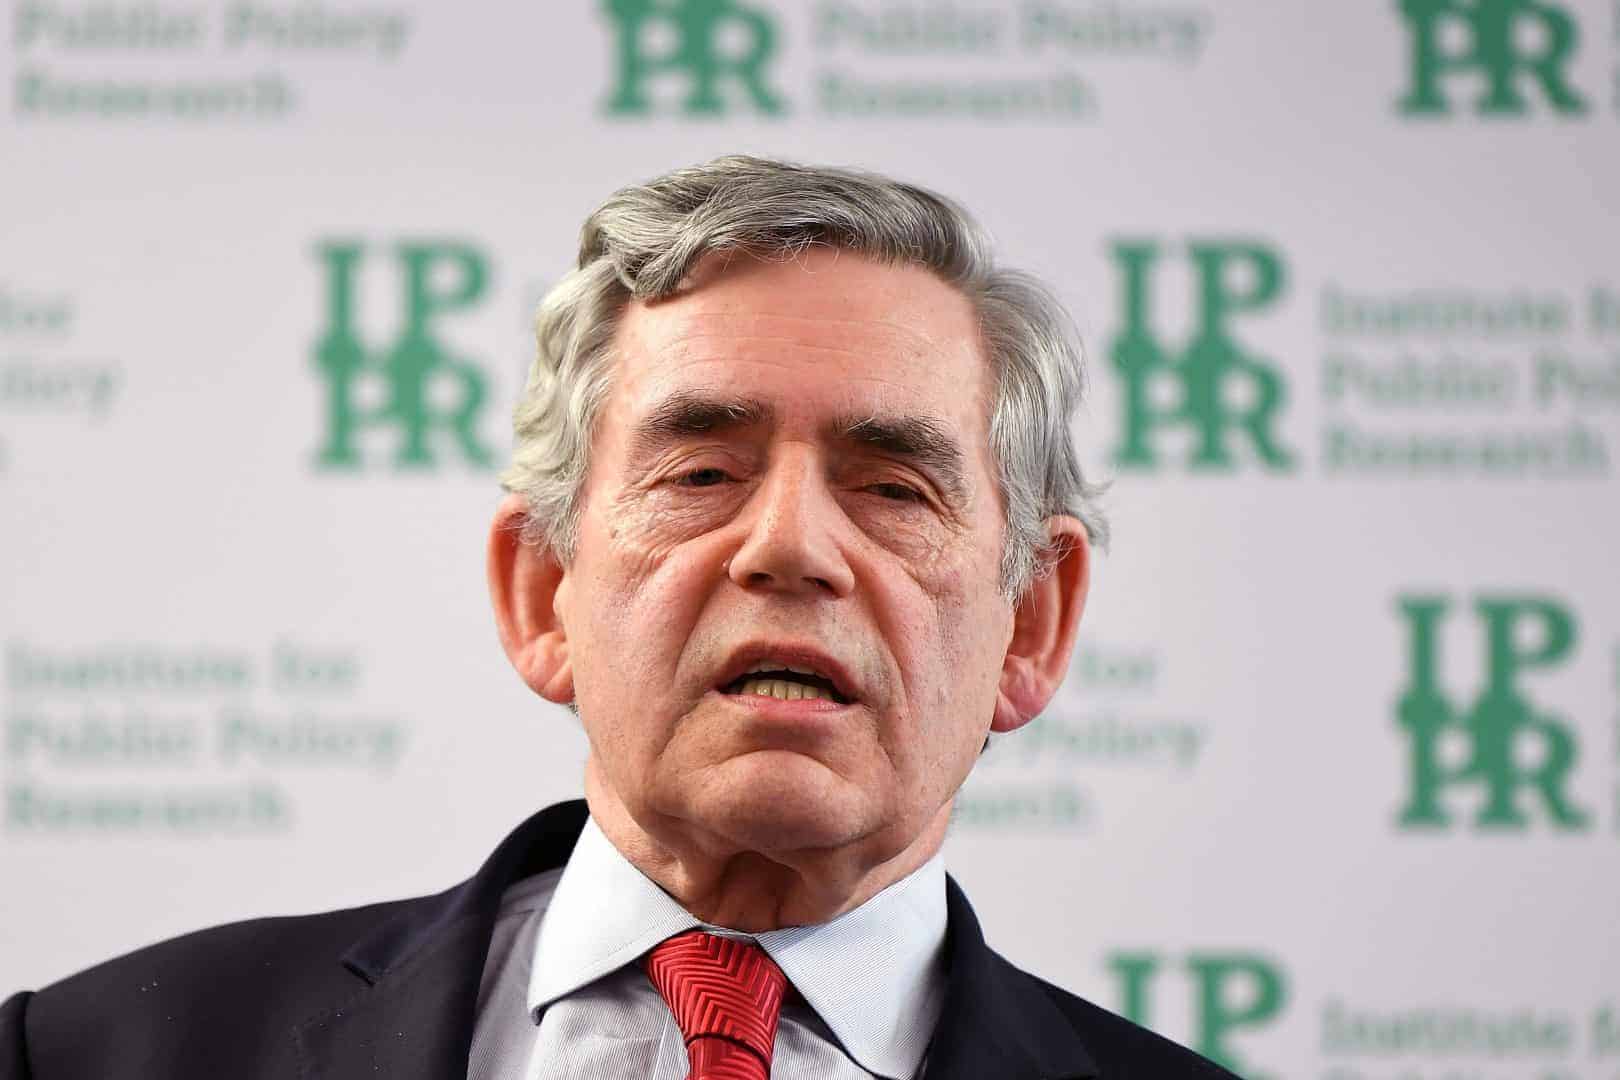 Gordon Brown backs Sir Keir Starmer’s Labour leadership bid